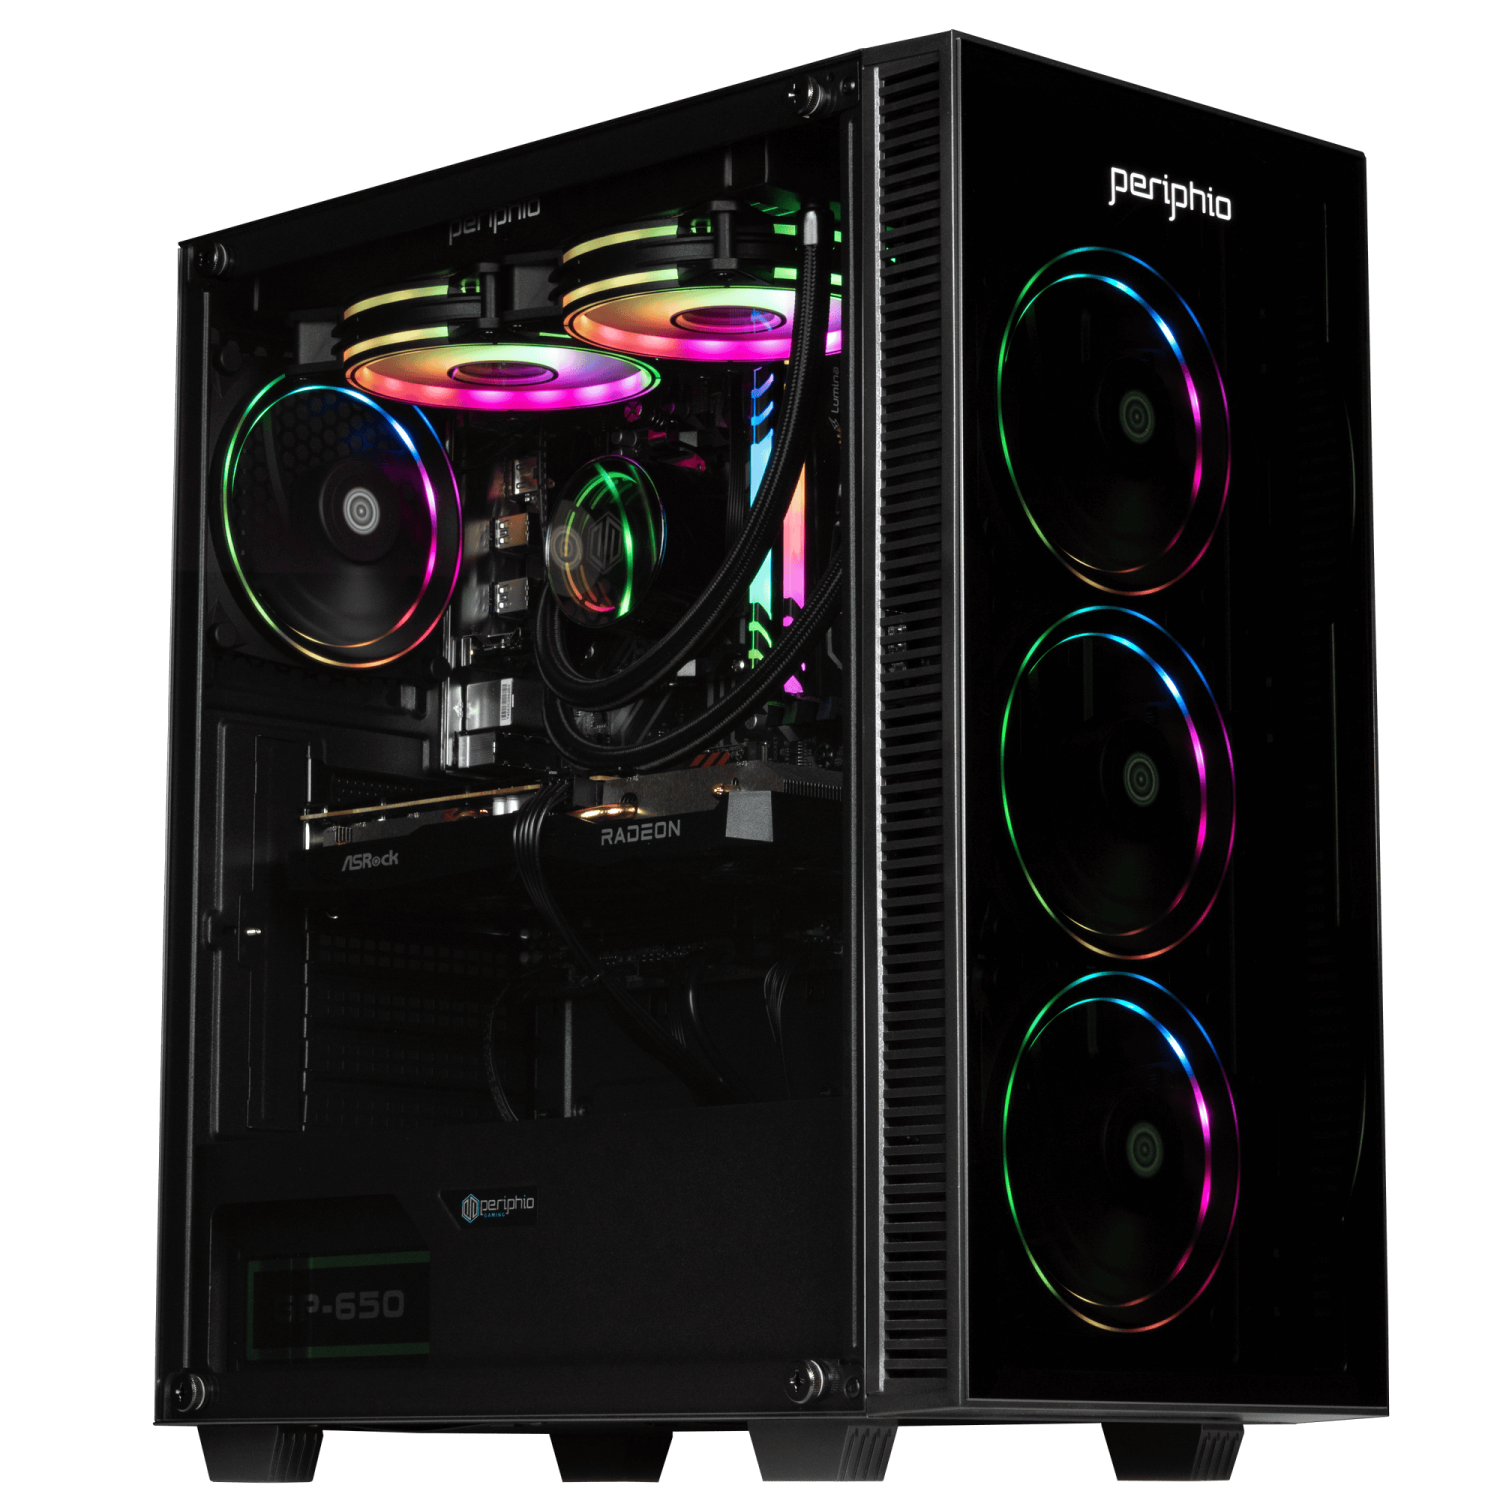 Periphio Firestorm Prebuilt Gaming PC |AMD Ryzen 5 5600X (4.6GHz Turbo) | Radeon RX 6600 (8GB) | 1TB M.2 NVMe SSD | 16GB DDR4 RAM | Win 10 Gaming Desktop Computer | WiFi + BT